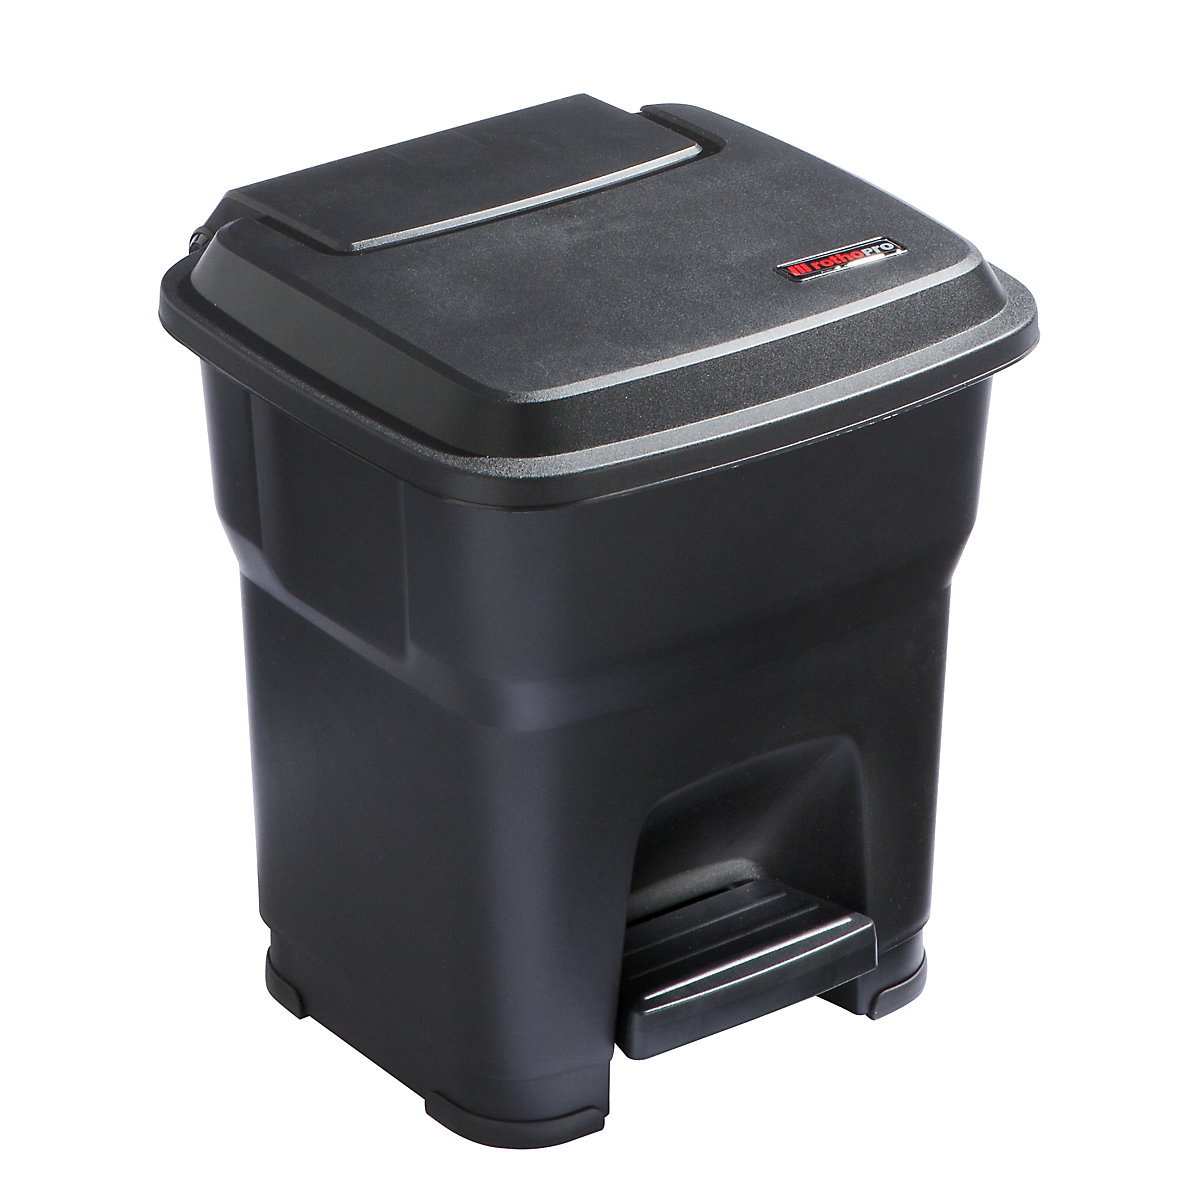 Zbiralnik odpadkov s pedalom HERA – rothopro, prostornina 35 l, ŠxVxG 390 x 440 x 390 mm, črna-6